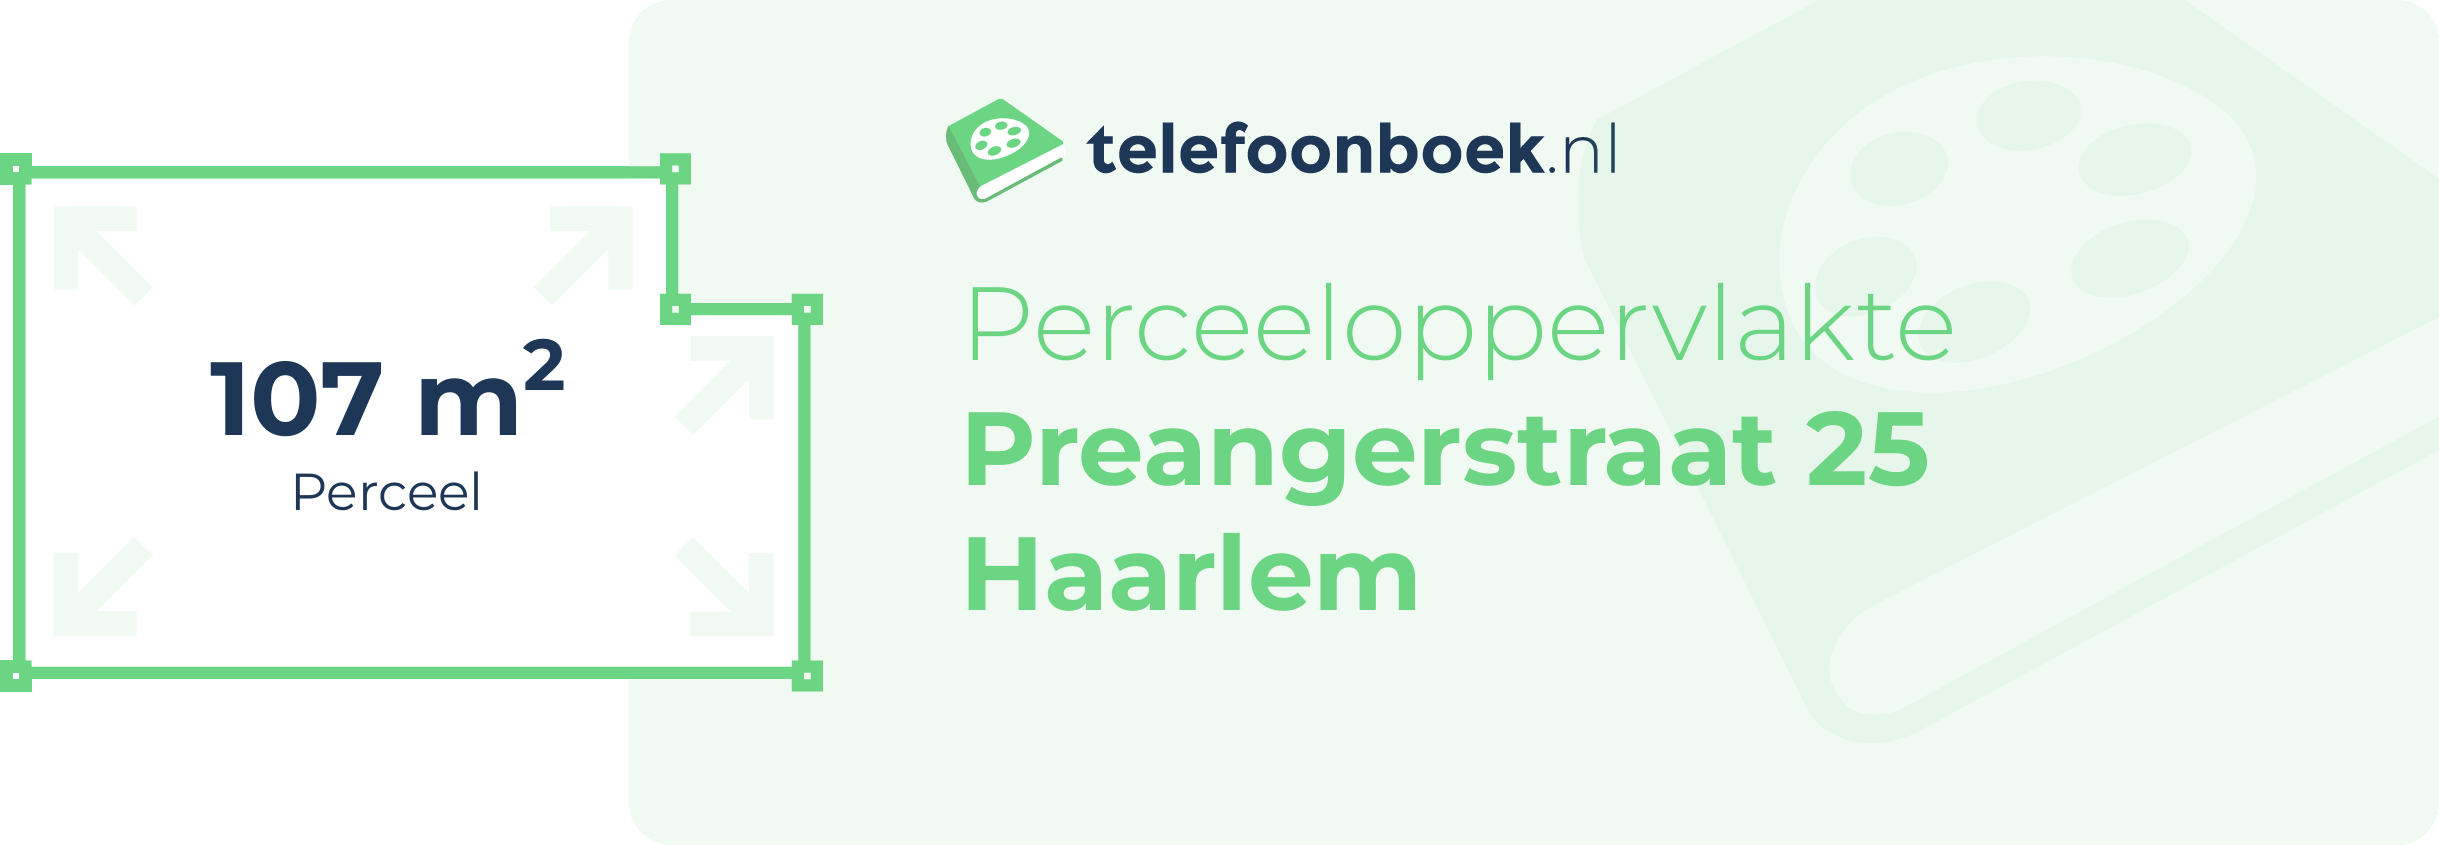 Perceeloppervlakte Preangerstraat 25 Haarlem